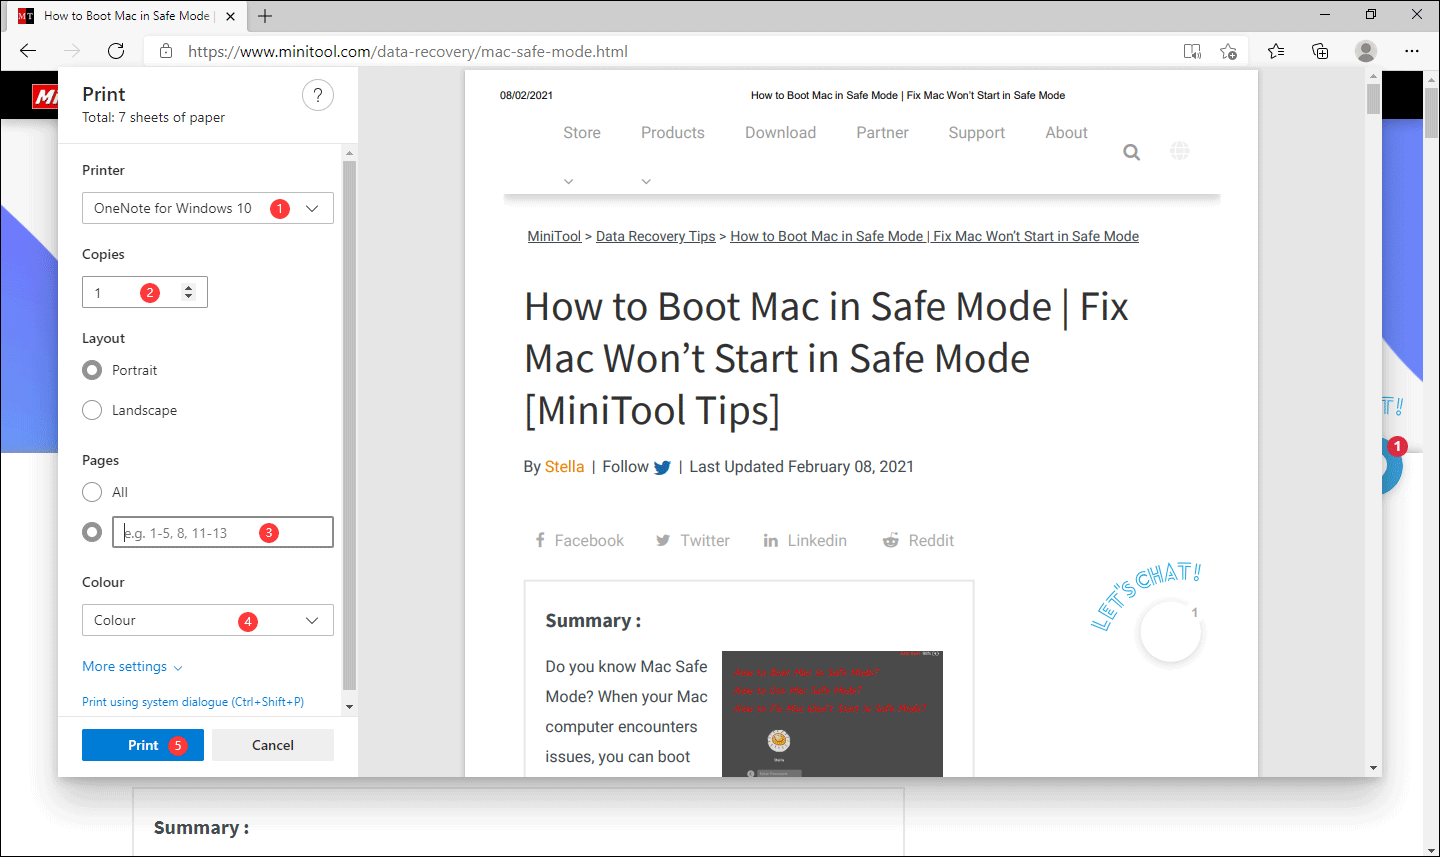 print a web page on Microsoft Edge